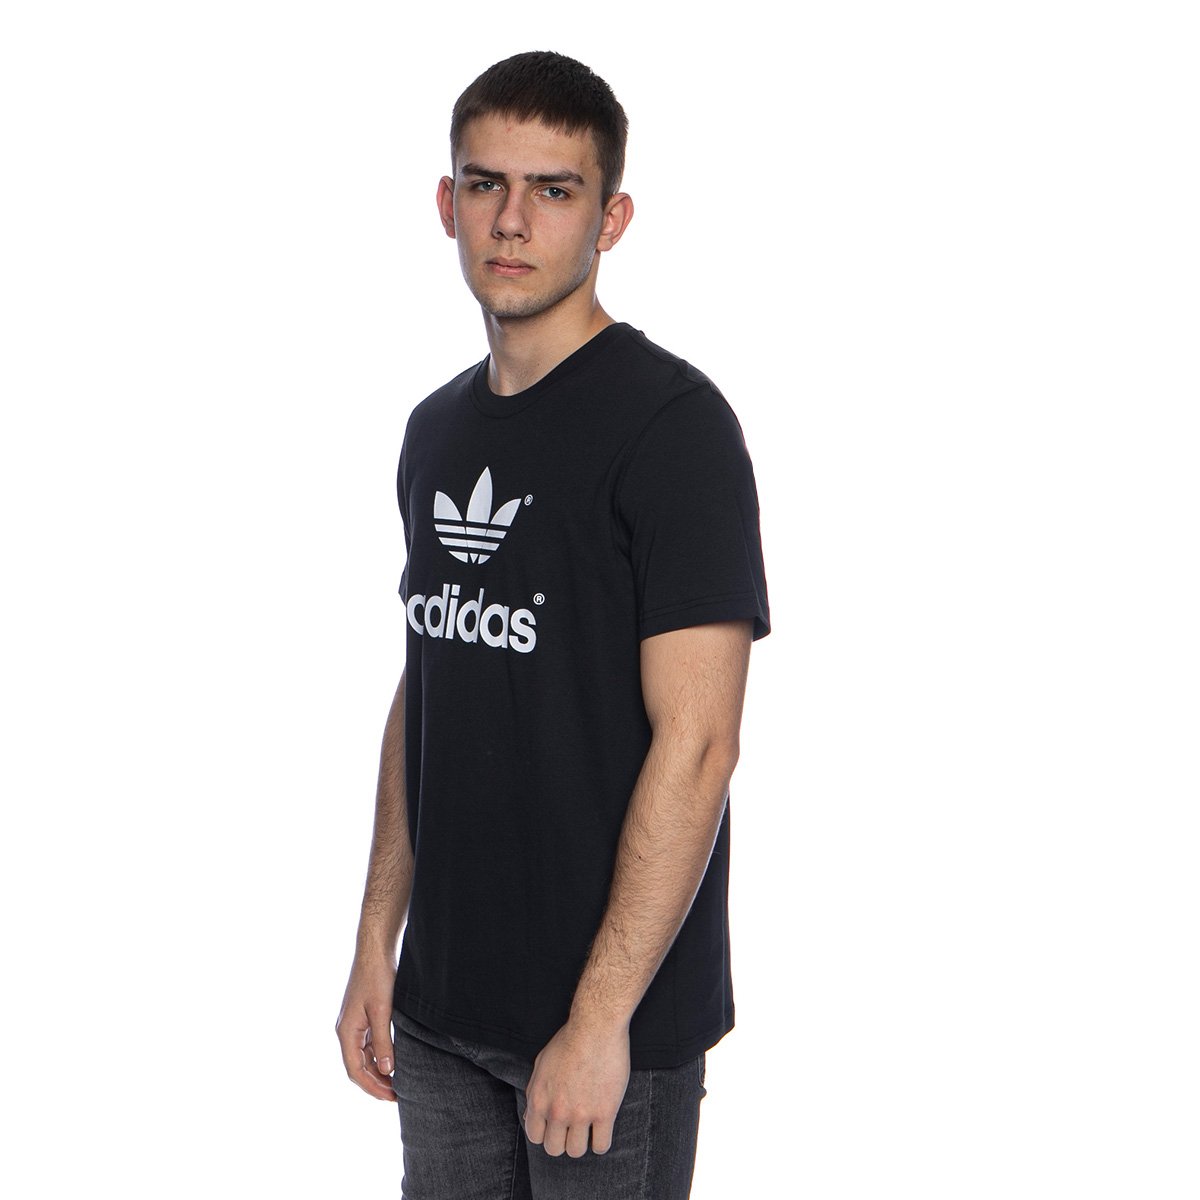 T-shirt Adidas Originals Trefoil History 72 Tee black/white | Bludshop.com